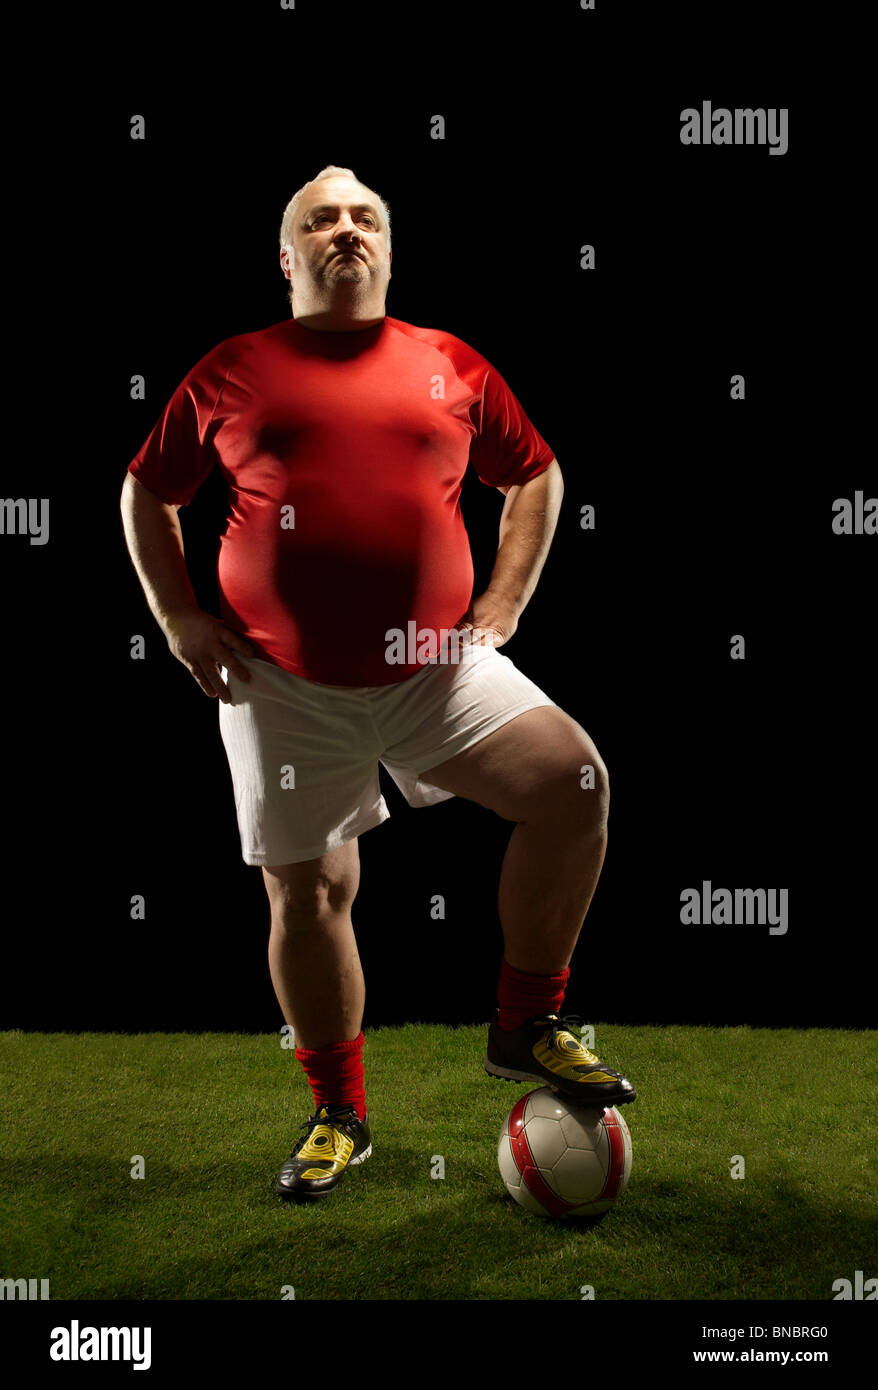 Grand sportif avec pied sur le football Photo Stock - Alamy